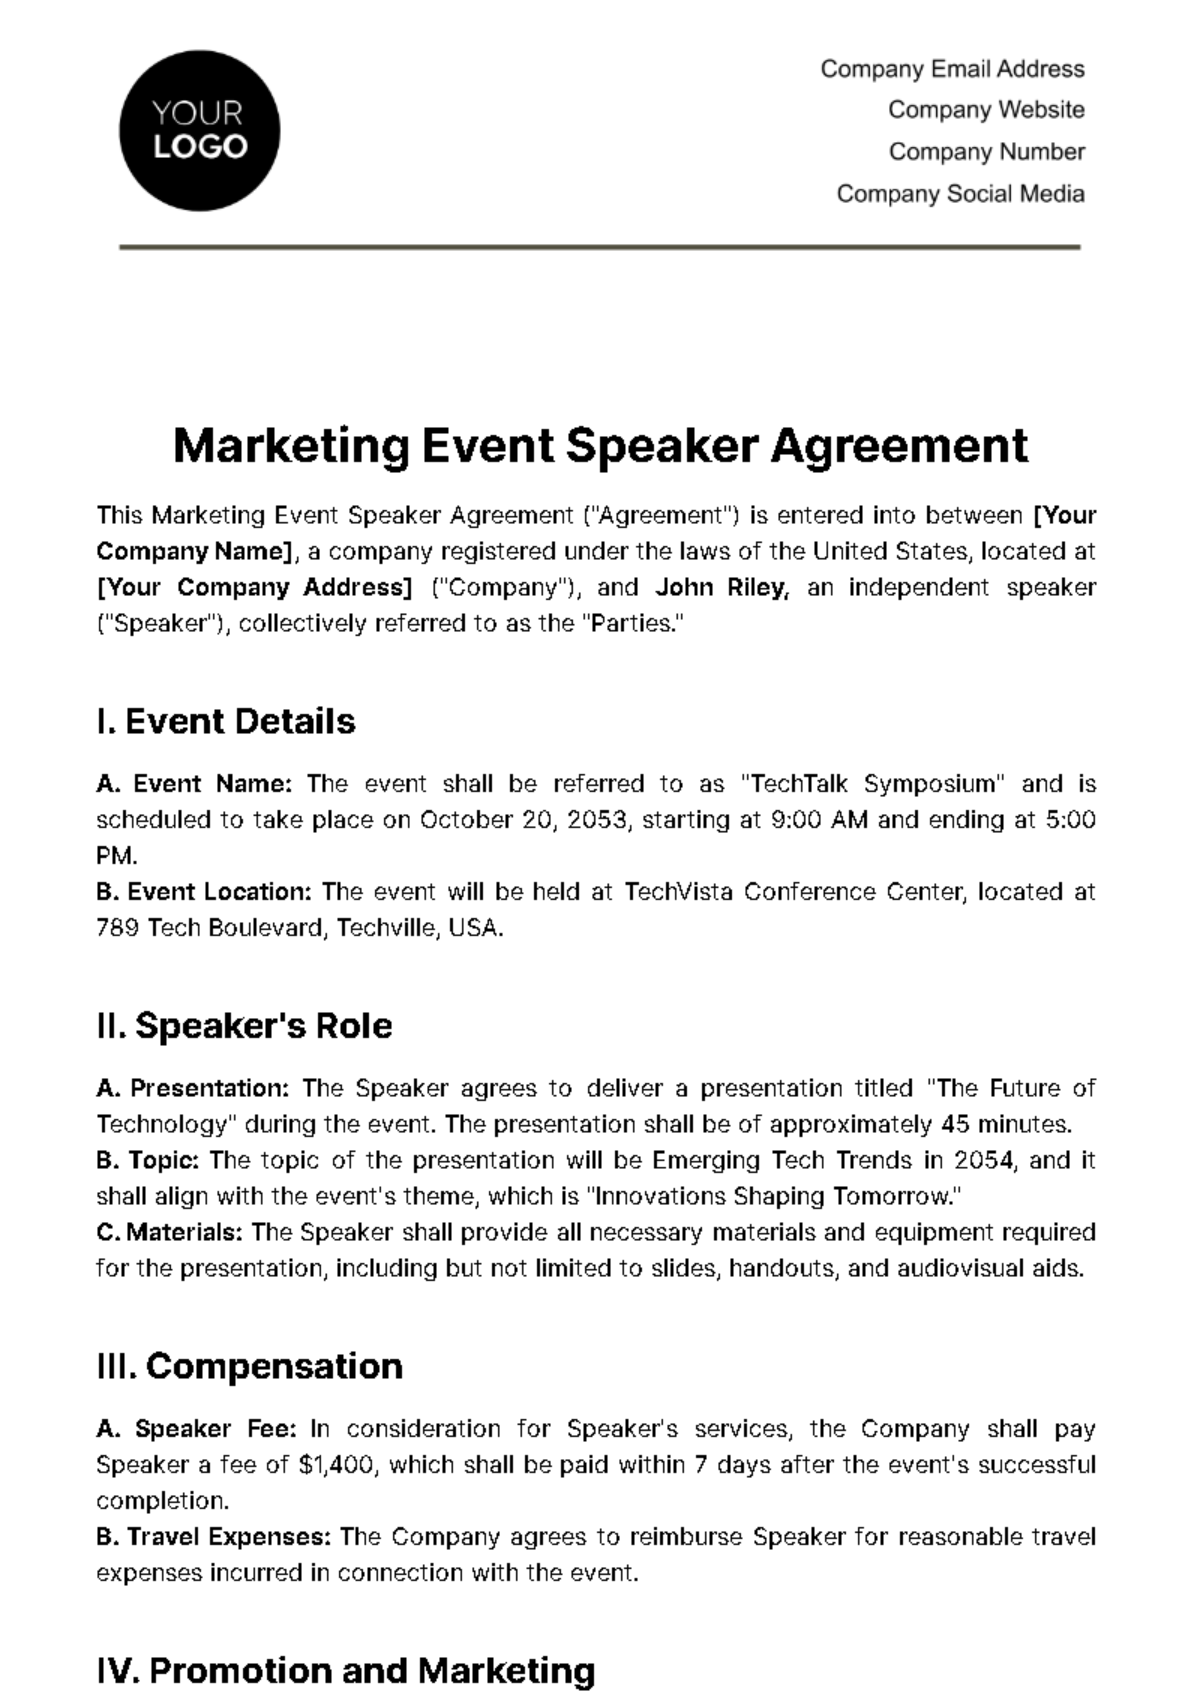 Free Marketing Event Speaker Agreement Template